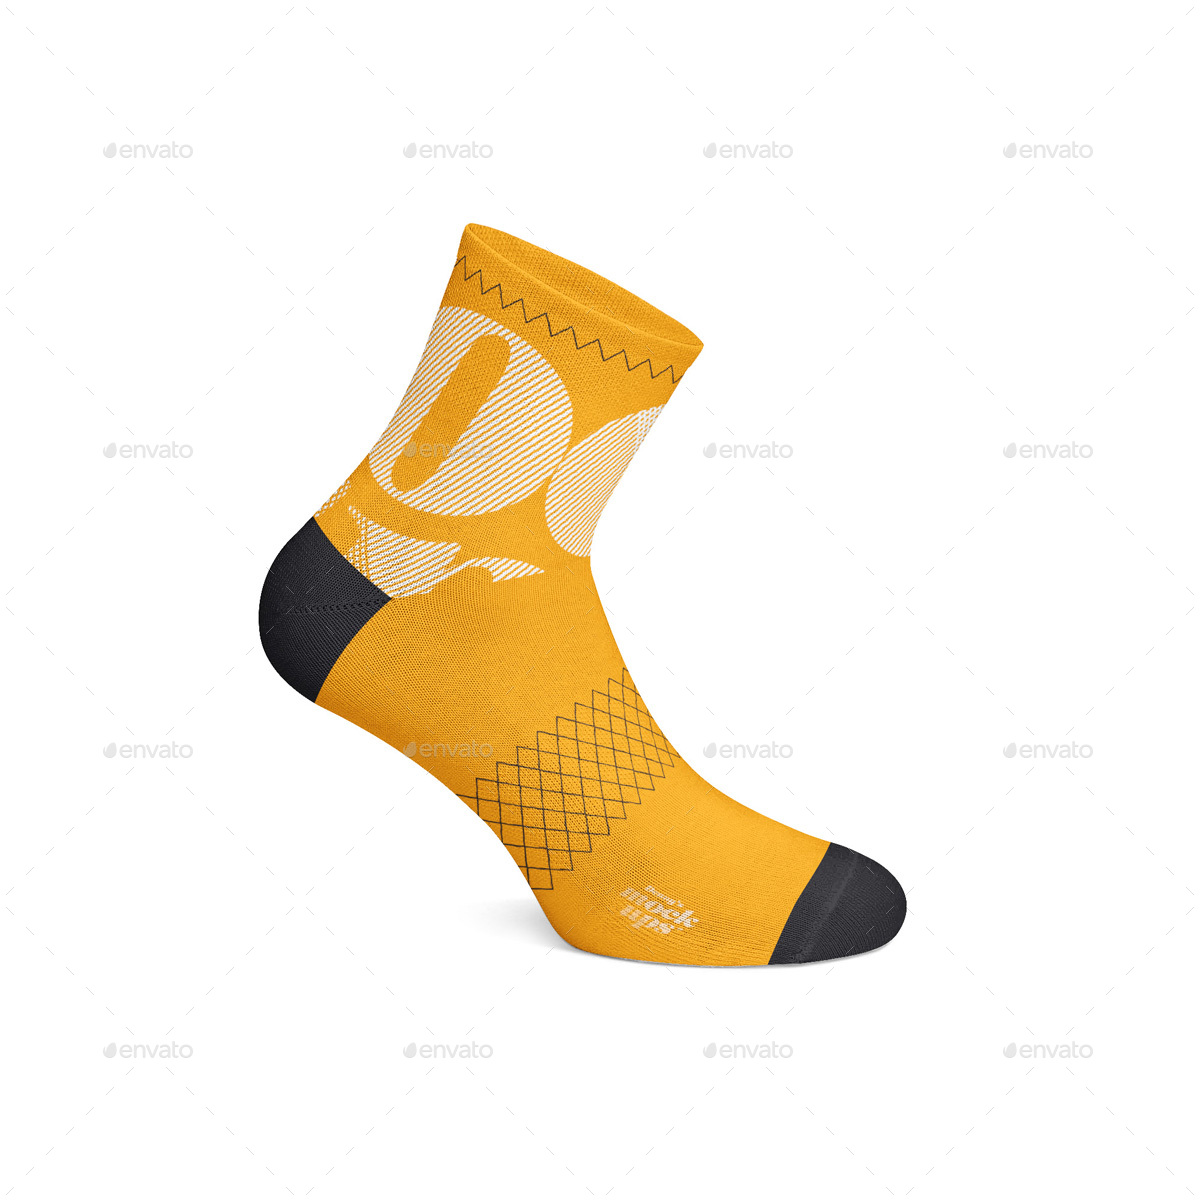 Download Cycling Socks 3 Types Mockup by dennysmockups | GraphicRiver